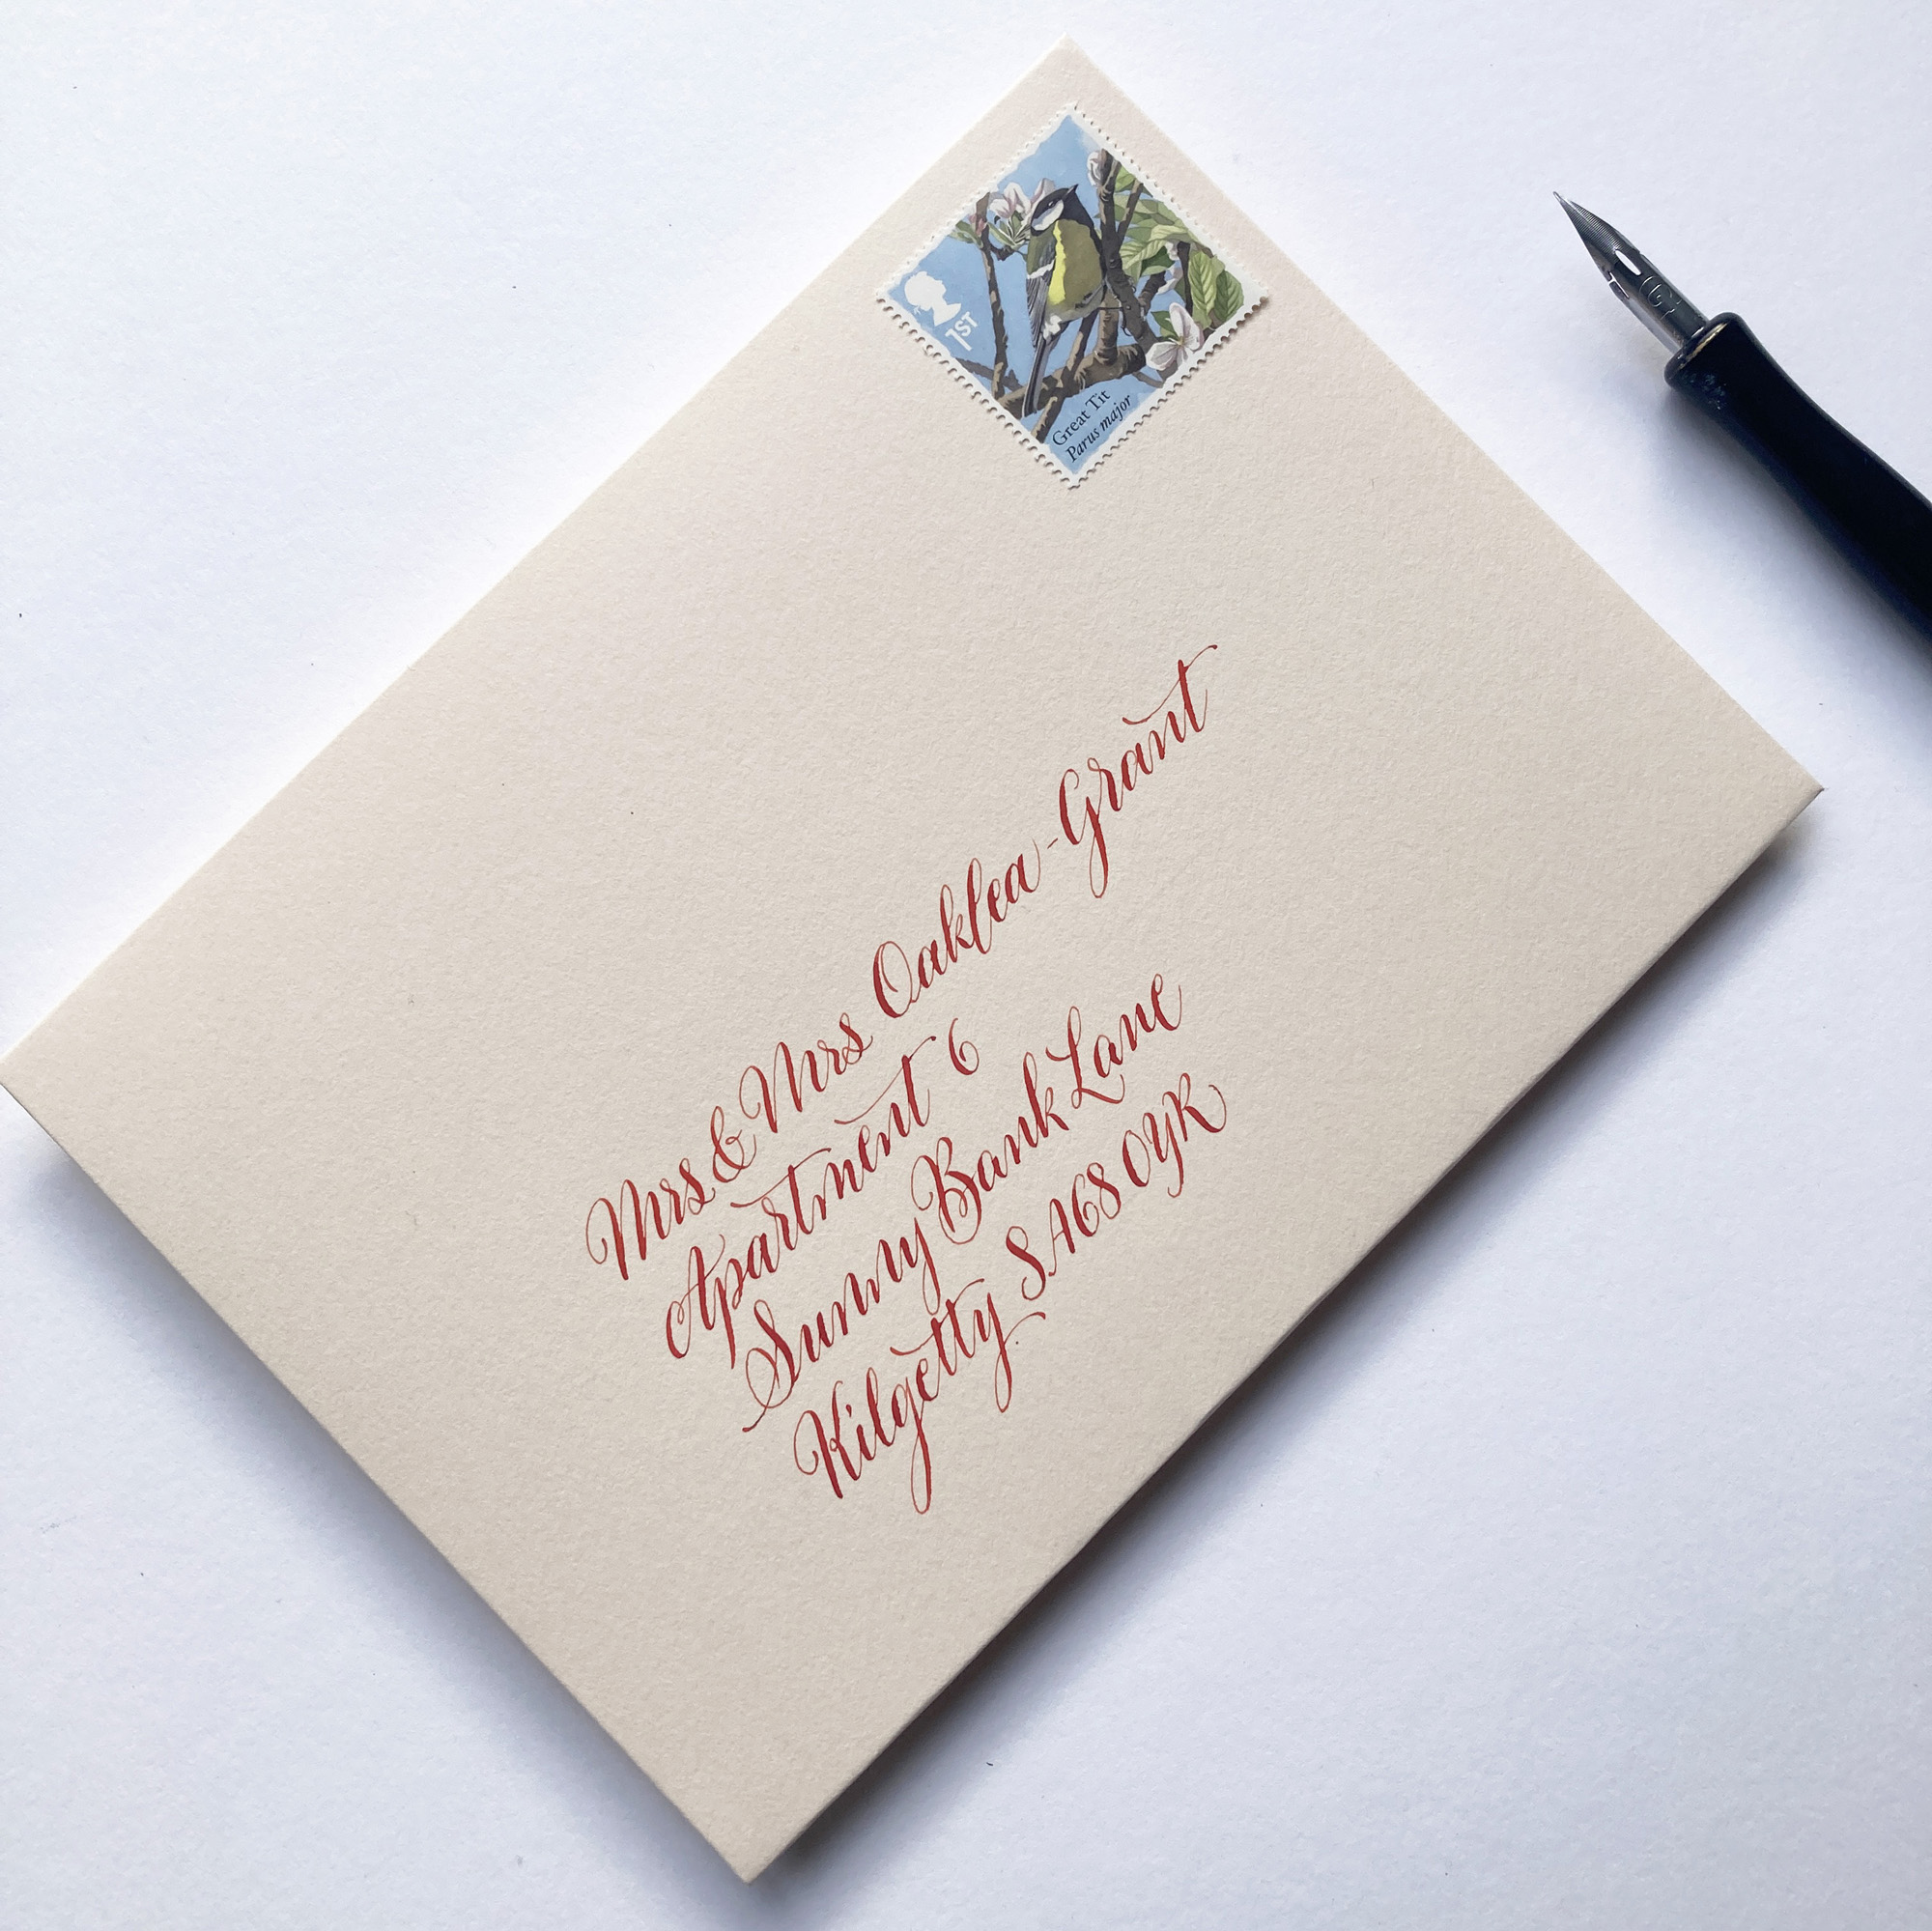 Romantic modern calligraphy on a wedding invitation envelope